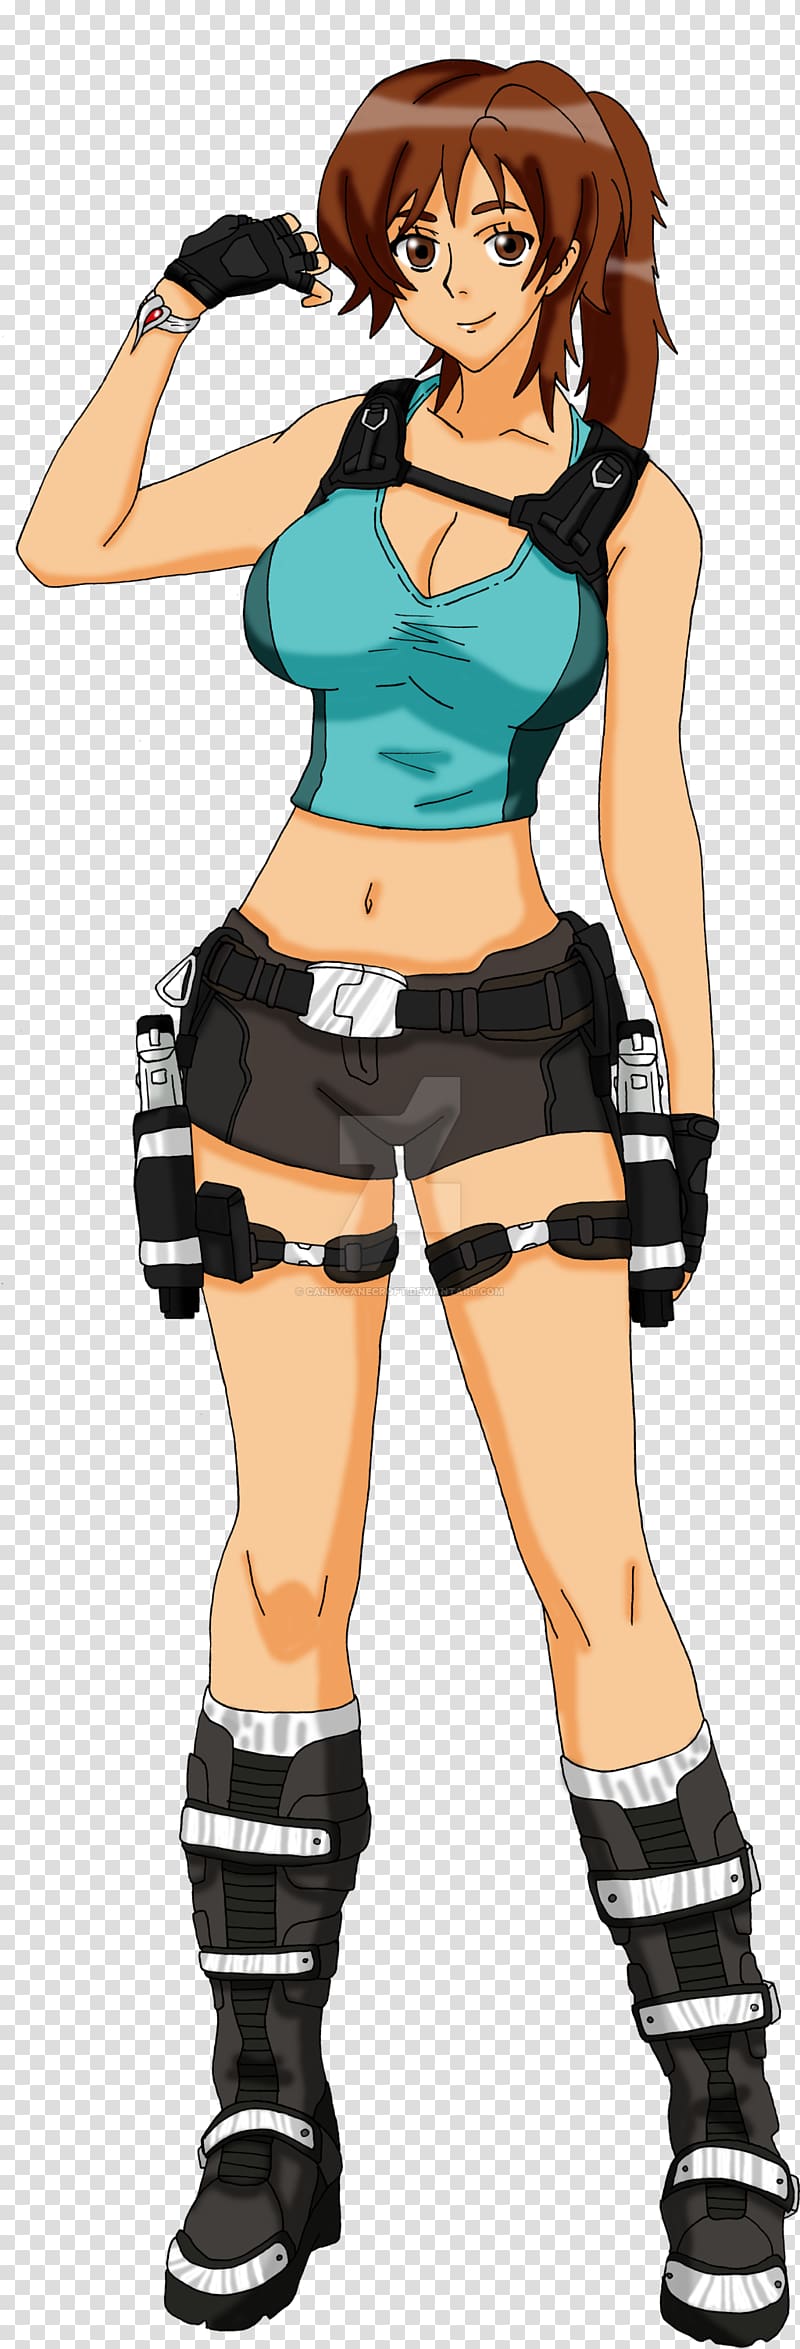 Lara Croft Anime Misaki Yata Mangaka, lara croft transparent background PNG clipart